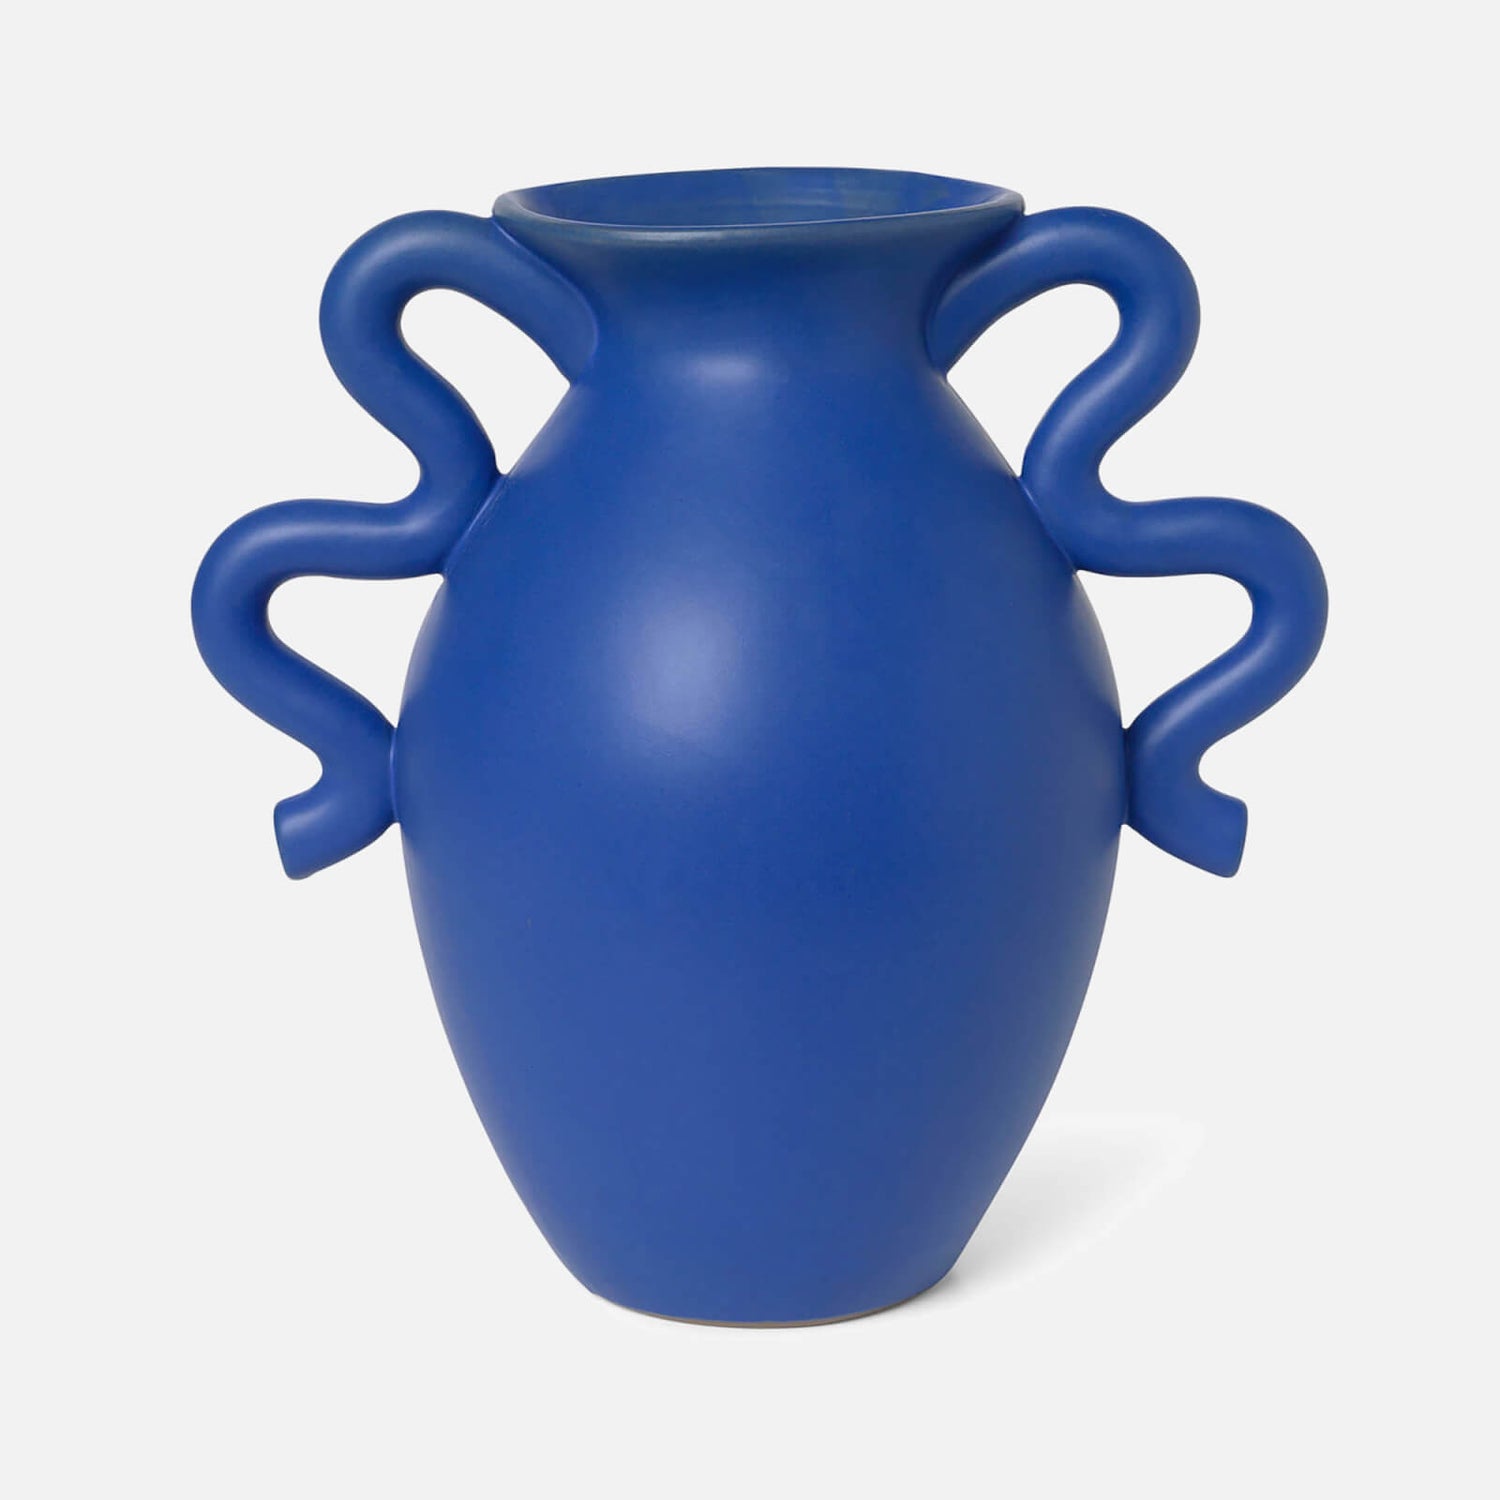 Ferm Living Verso Table Vase - Bright blue